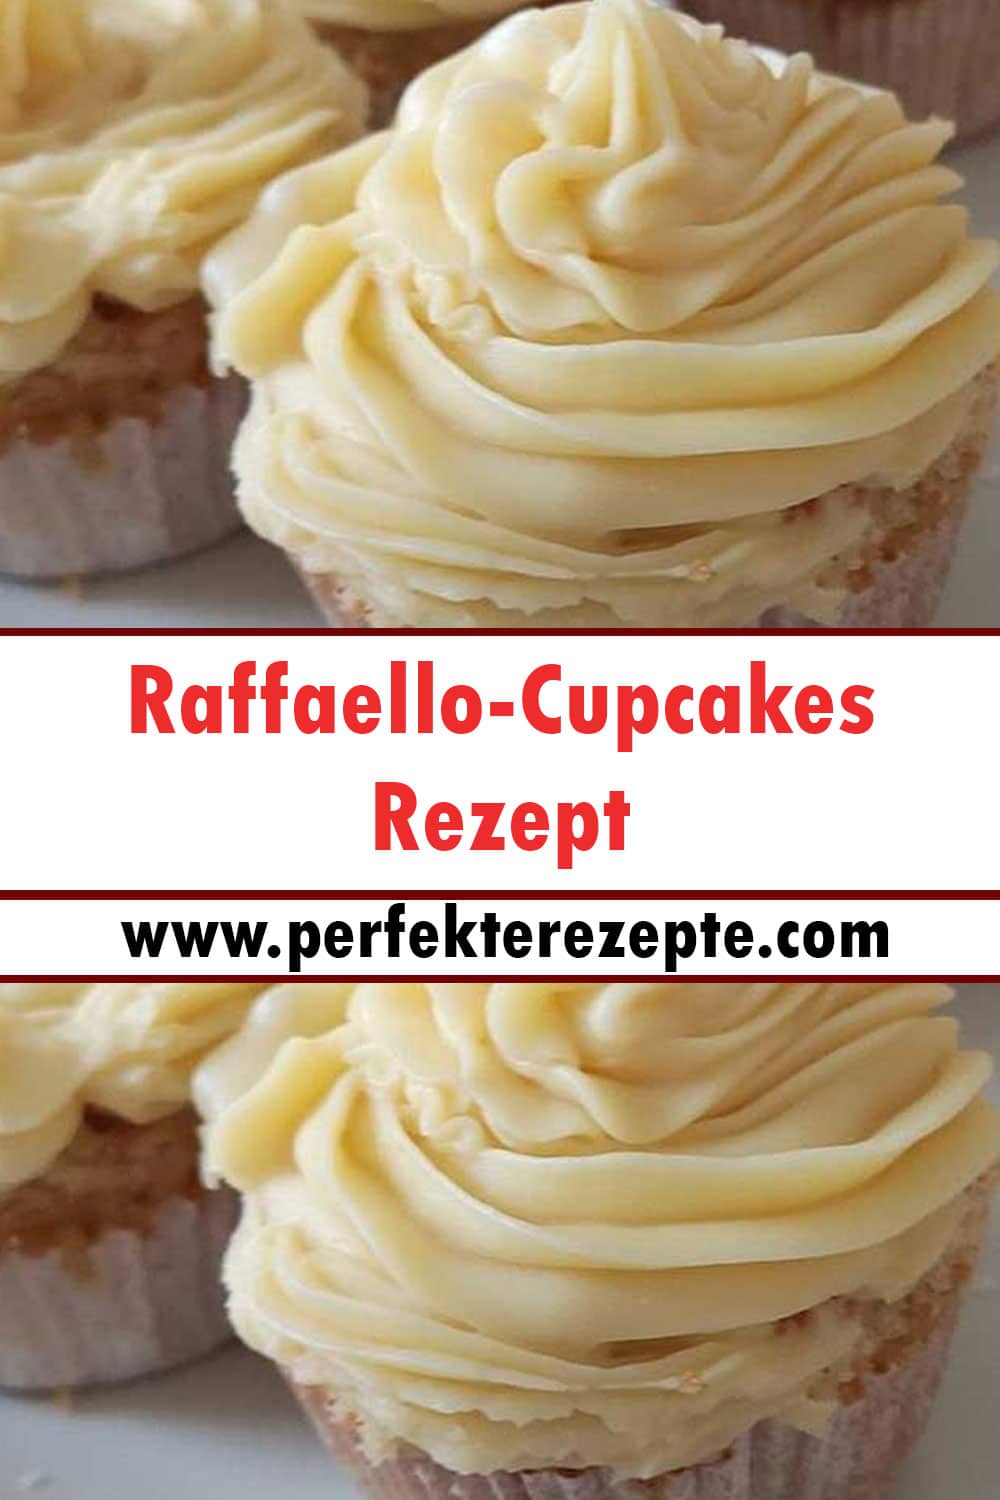 Raffaello-Cupcakes Rezept